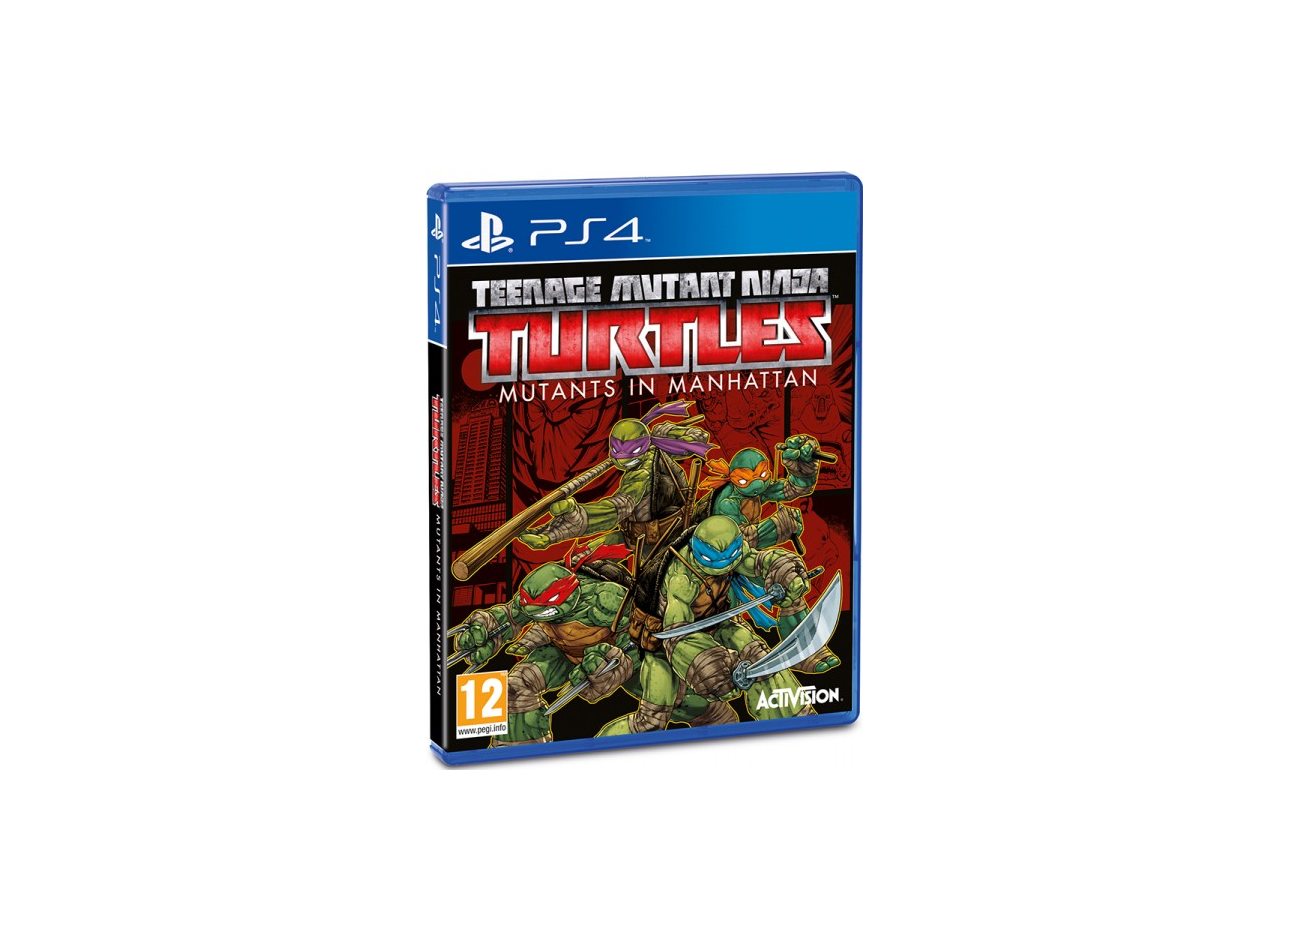 PS 4 Teenage Mutant Ninja Turtles: Mutants in Manhattan PS 4